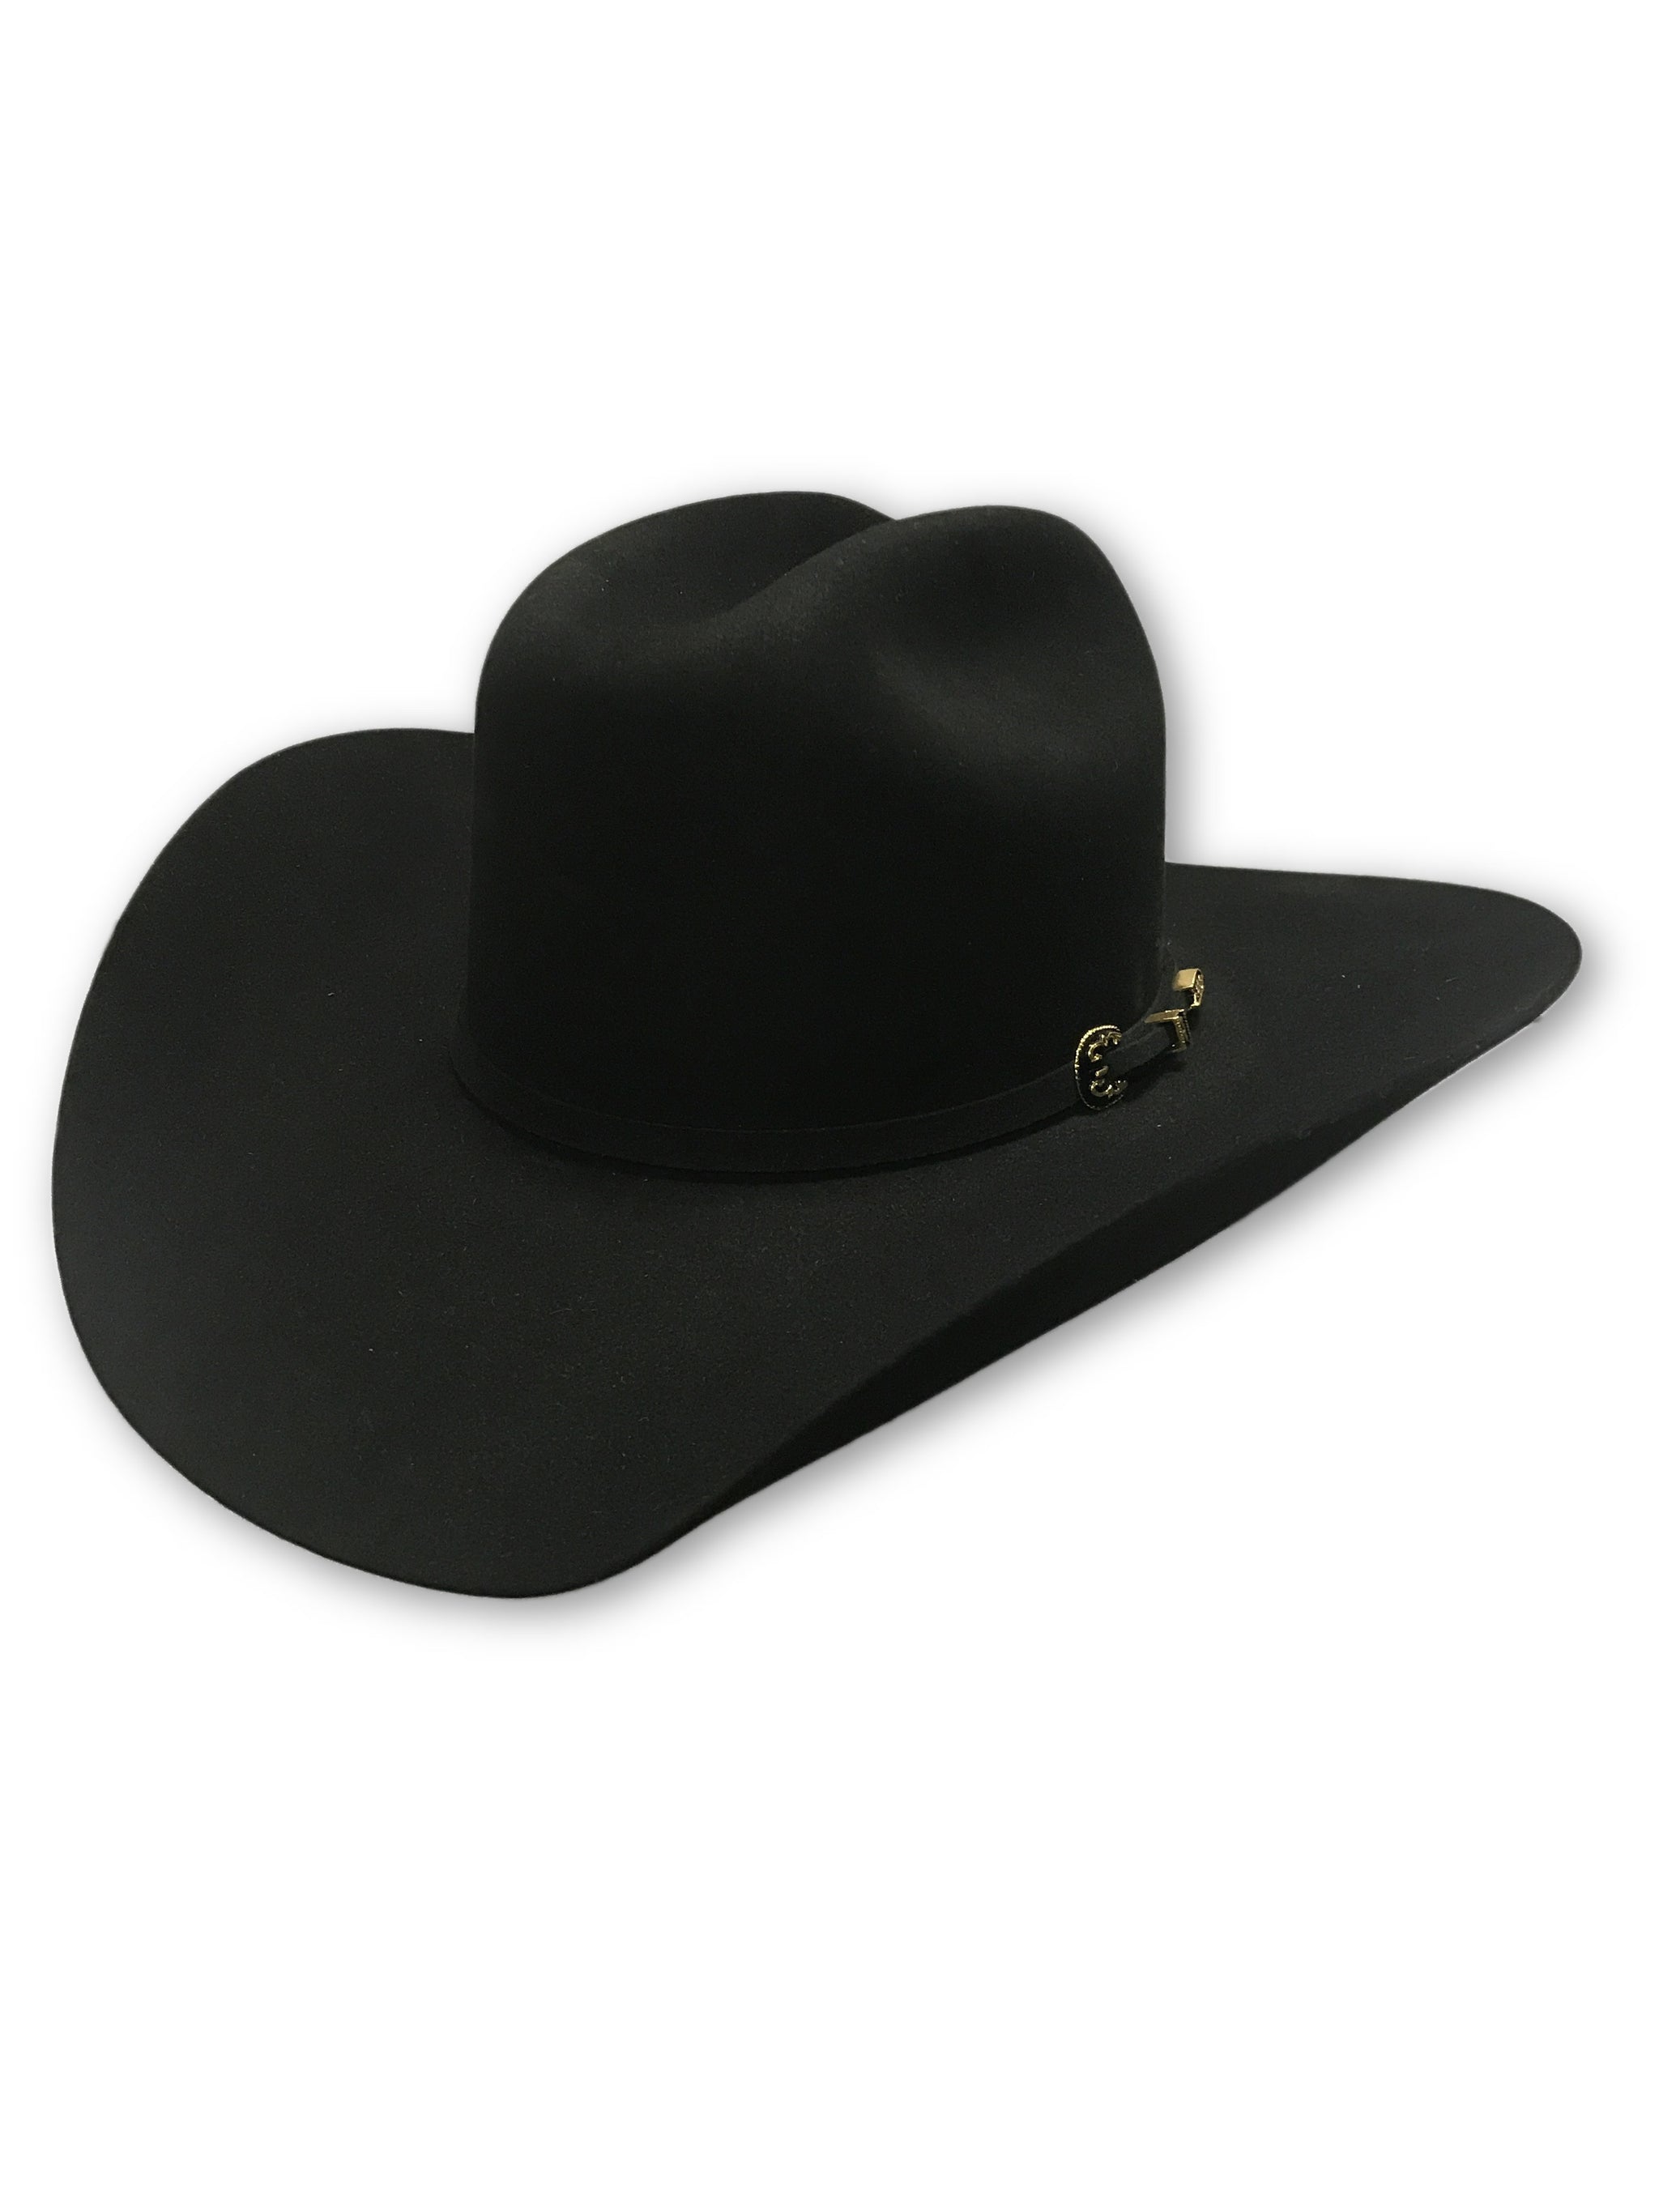 Serratelli 6X Black Felt Hat - S9 Profile - Connolly Saddlery